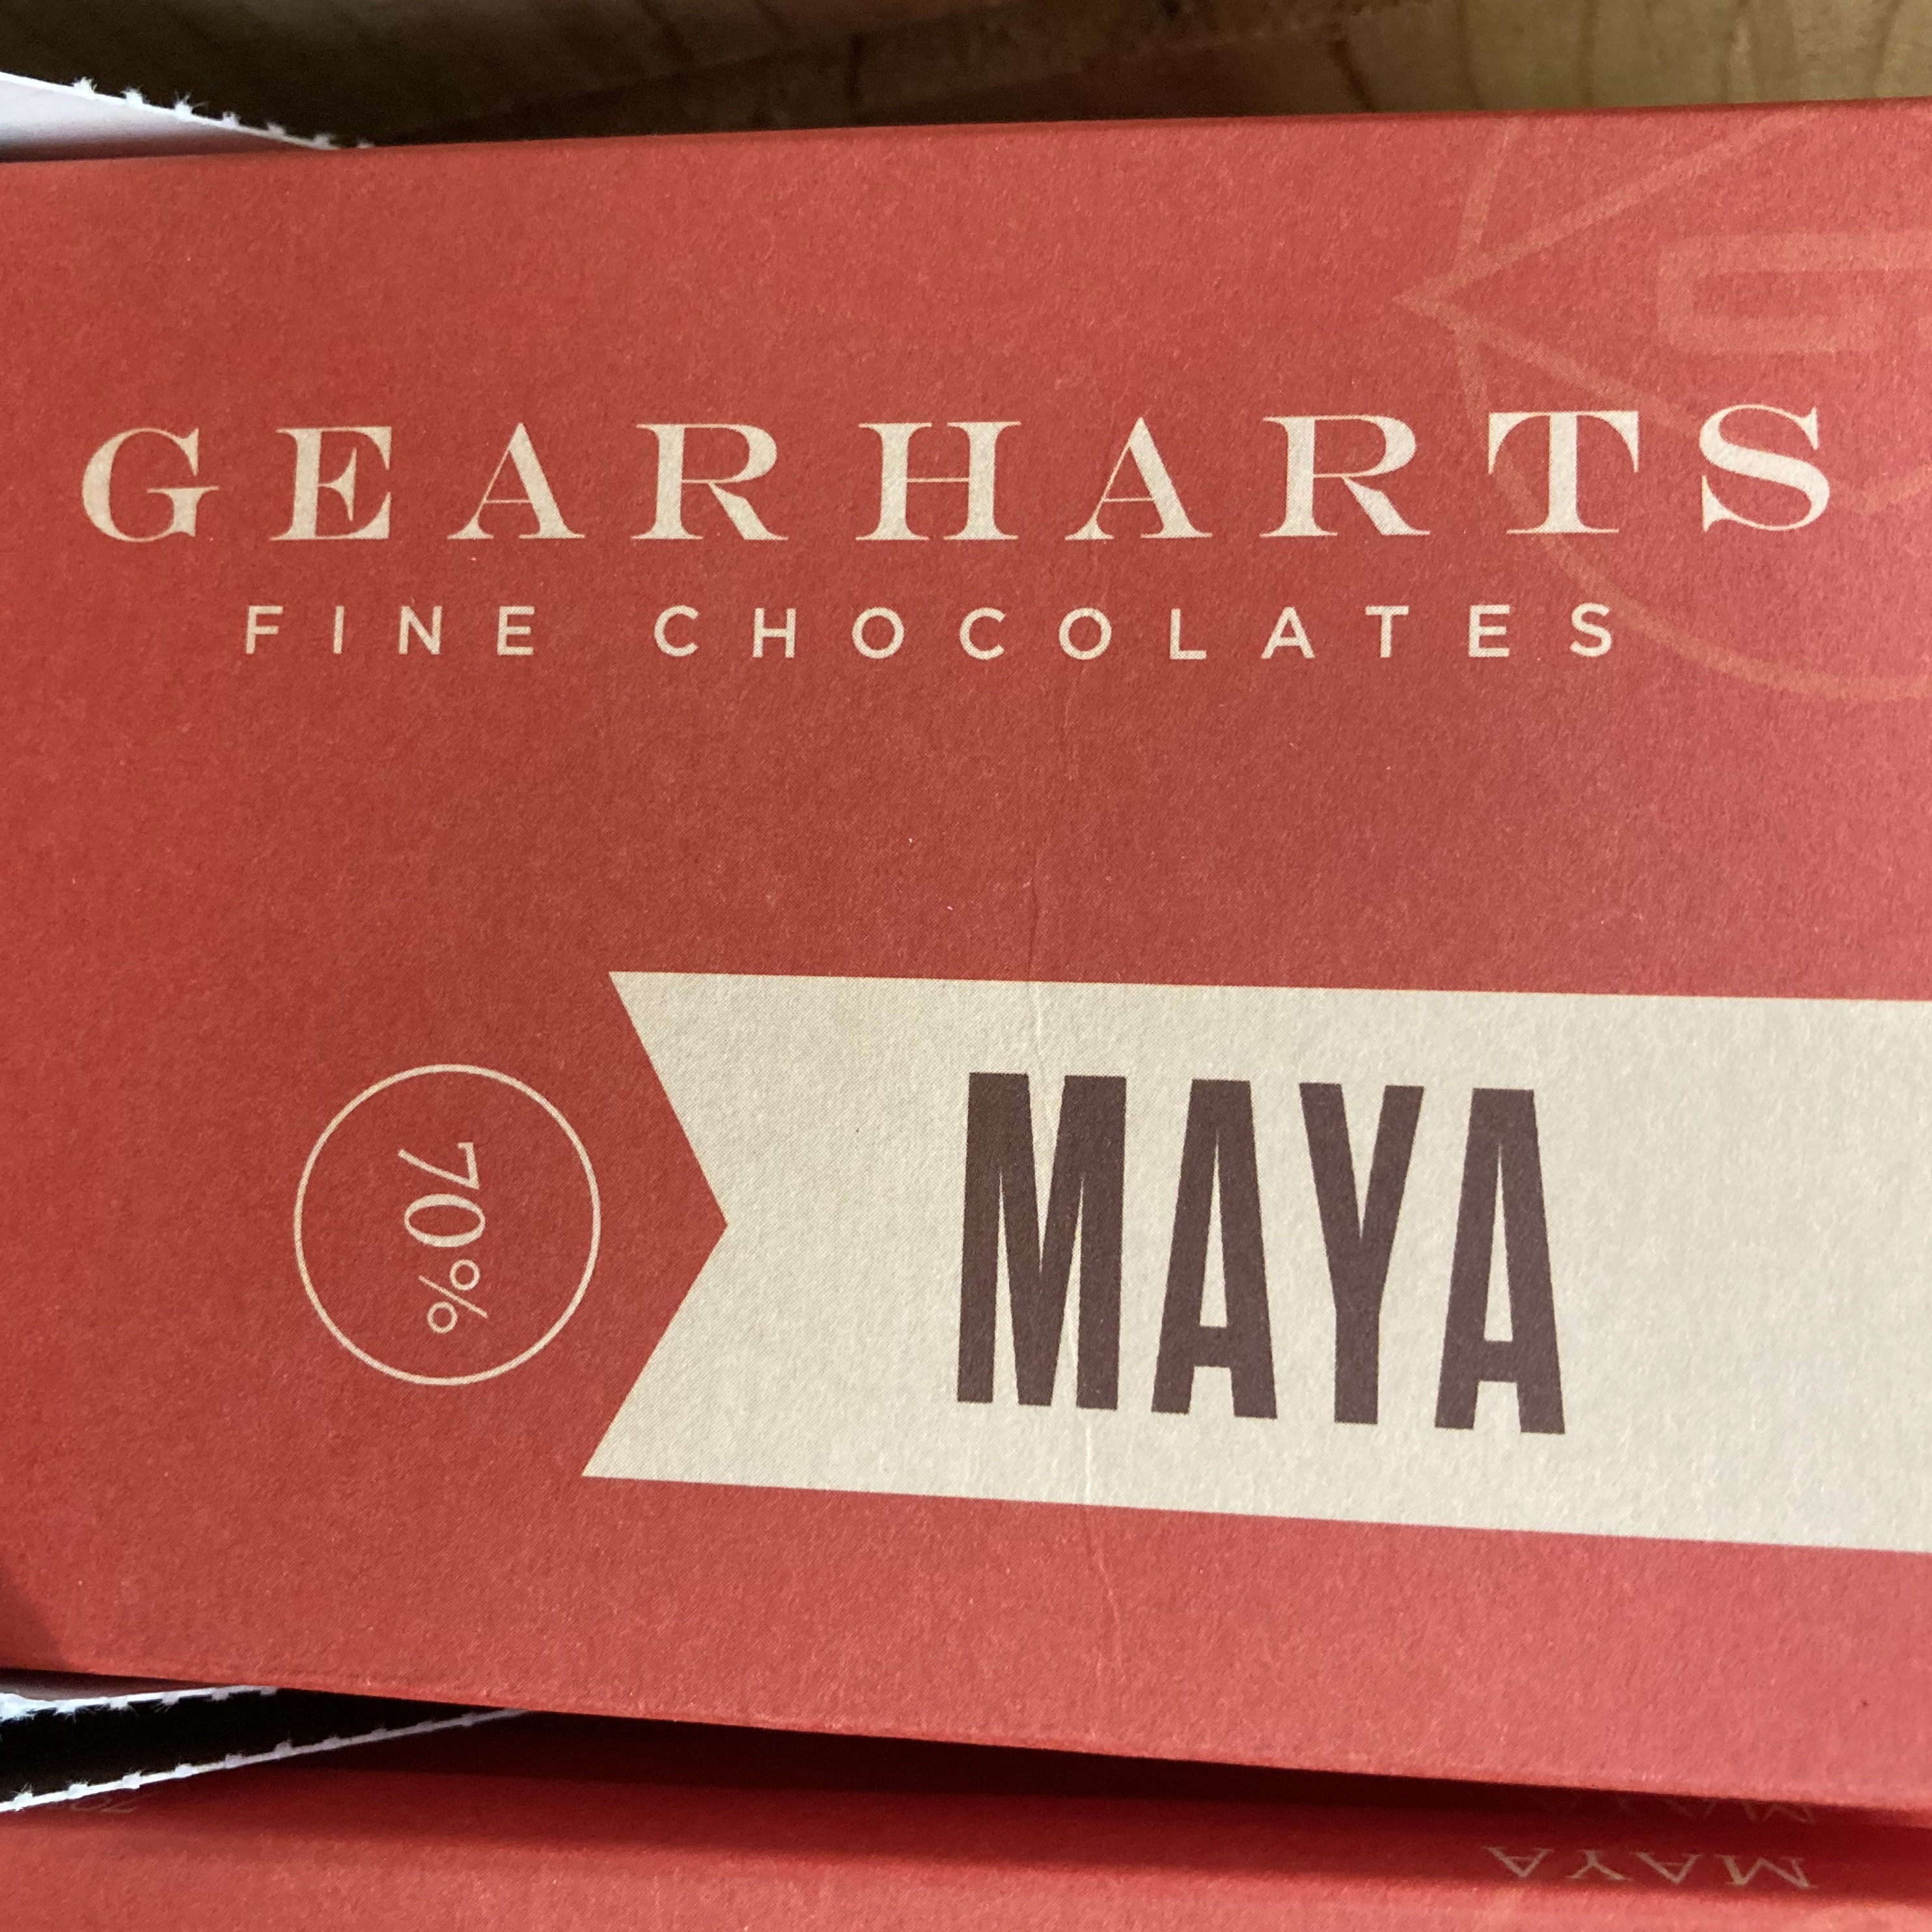 Gearharts Maya Chocolate Bar